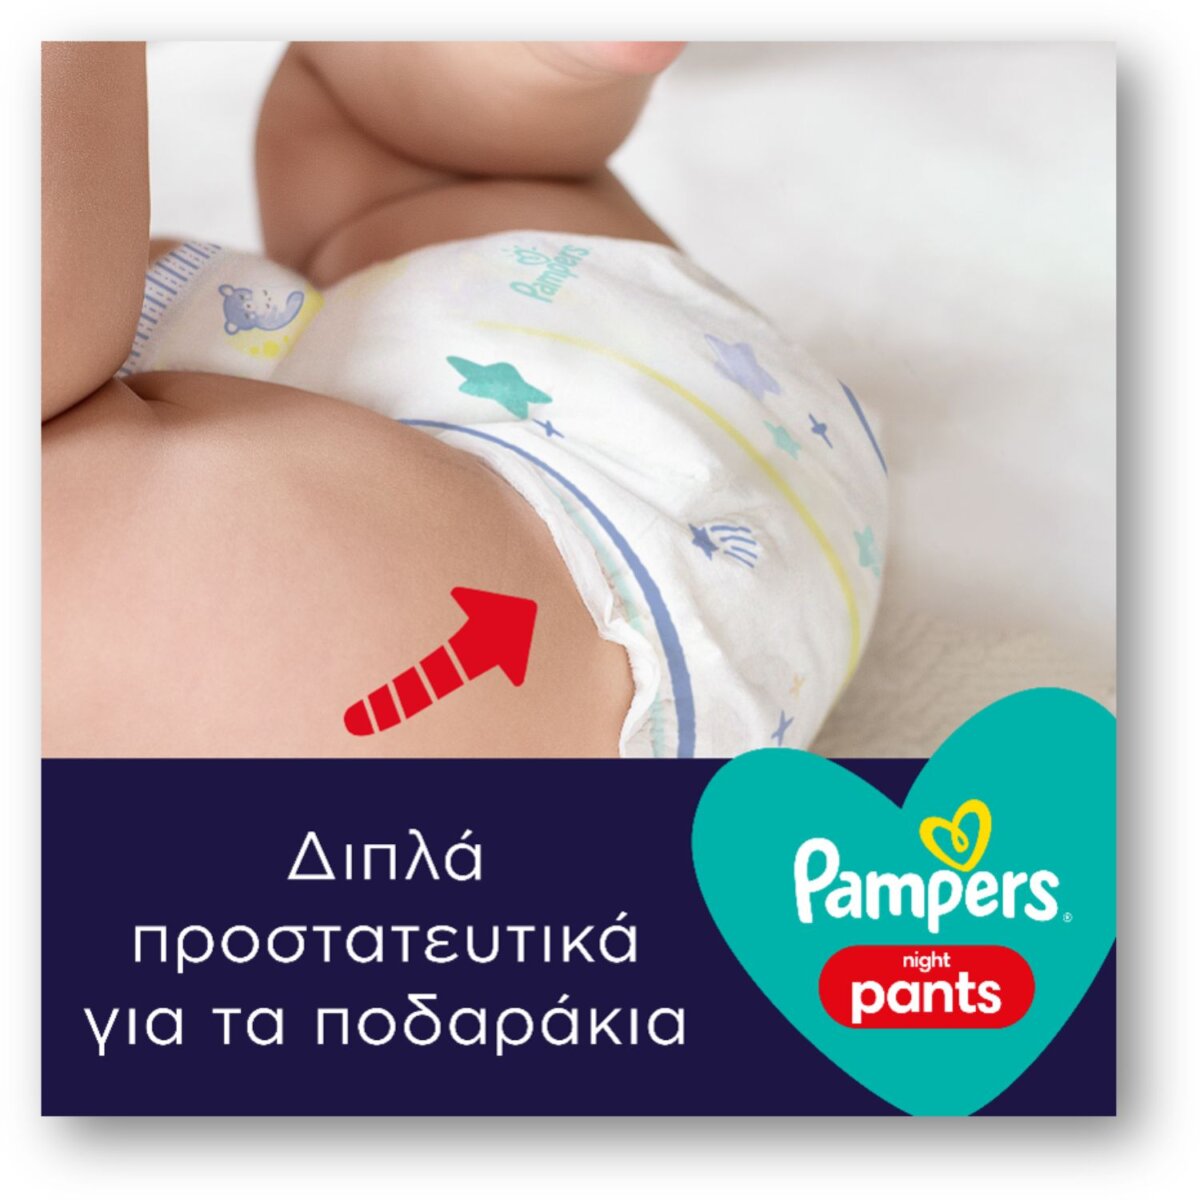 pampers-night-pants-mamspharmacy-8